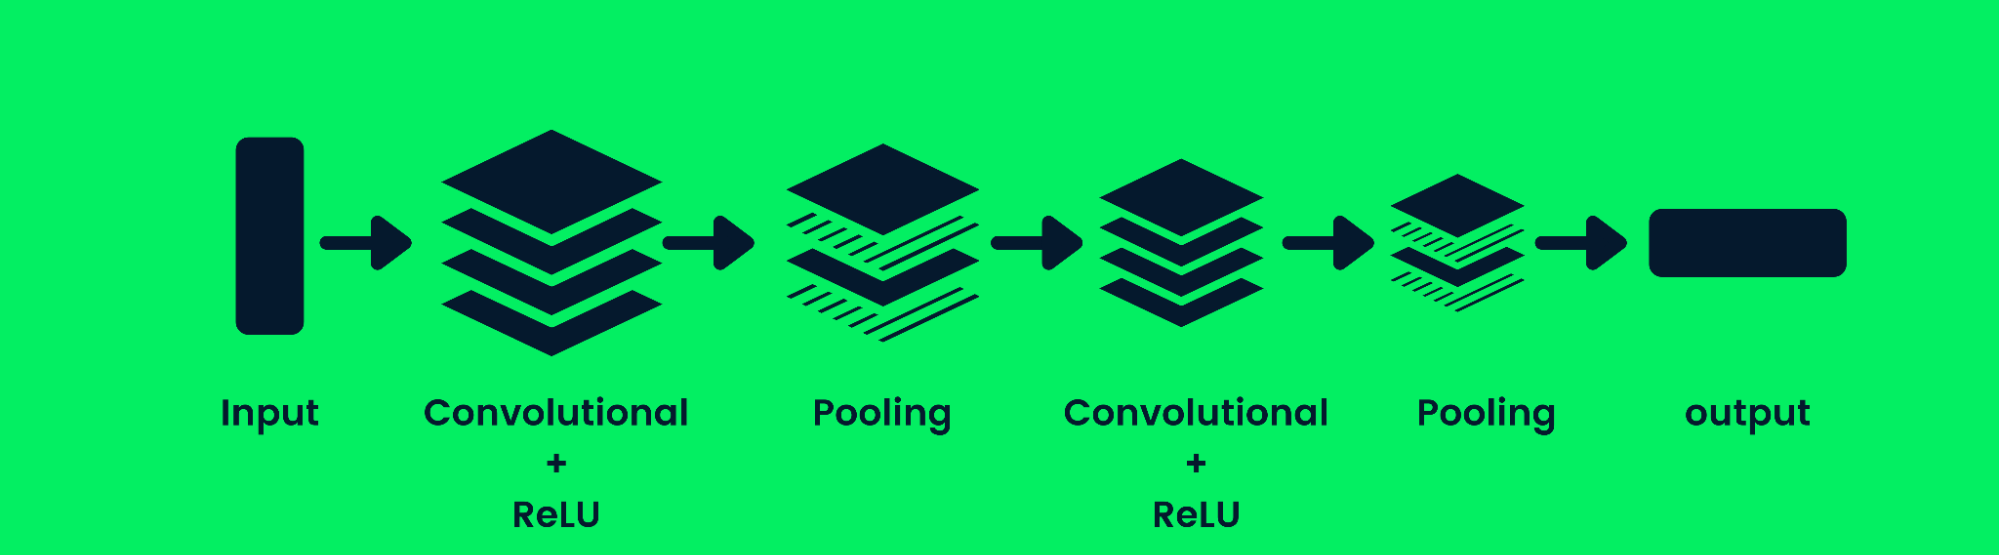 Convolution neural network architecture